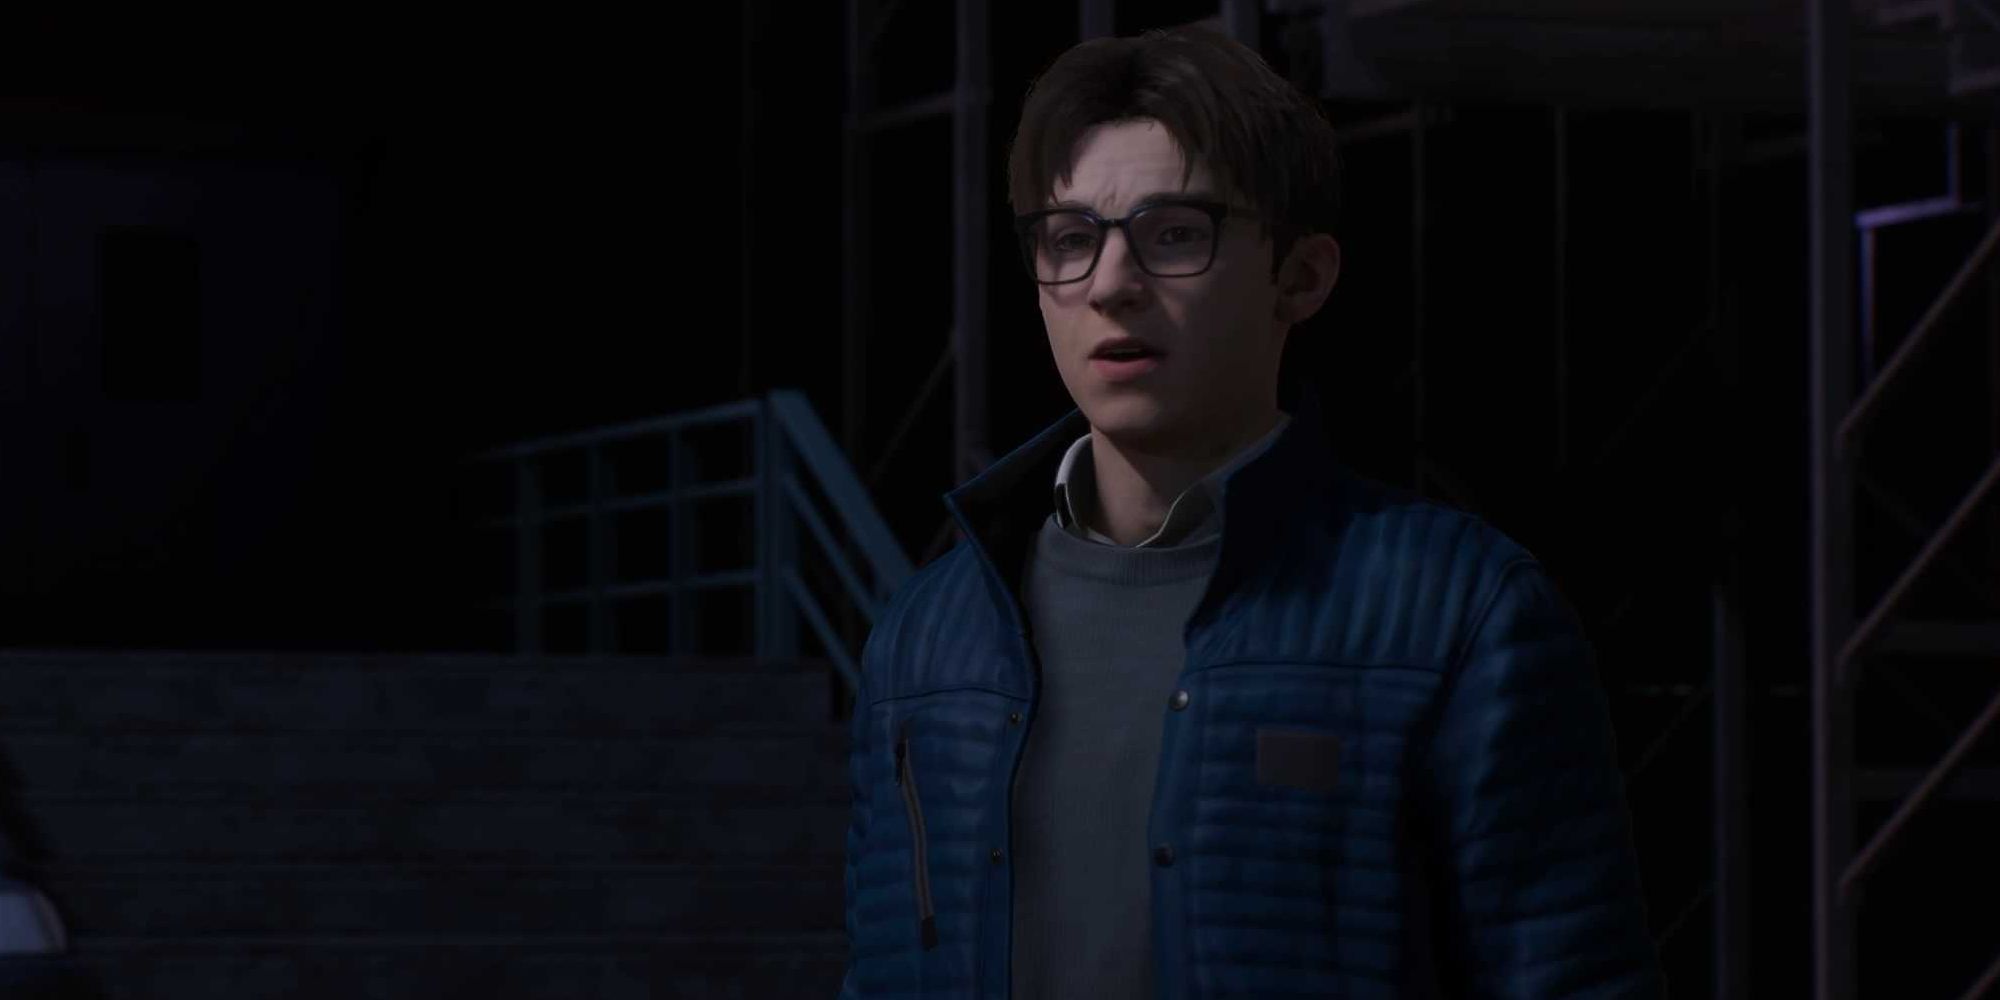 Spider-Man 2 Sets Up The Series' Own Arkham Origins